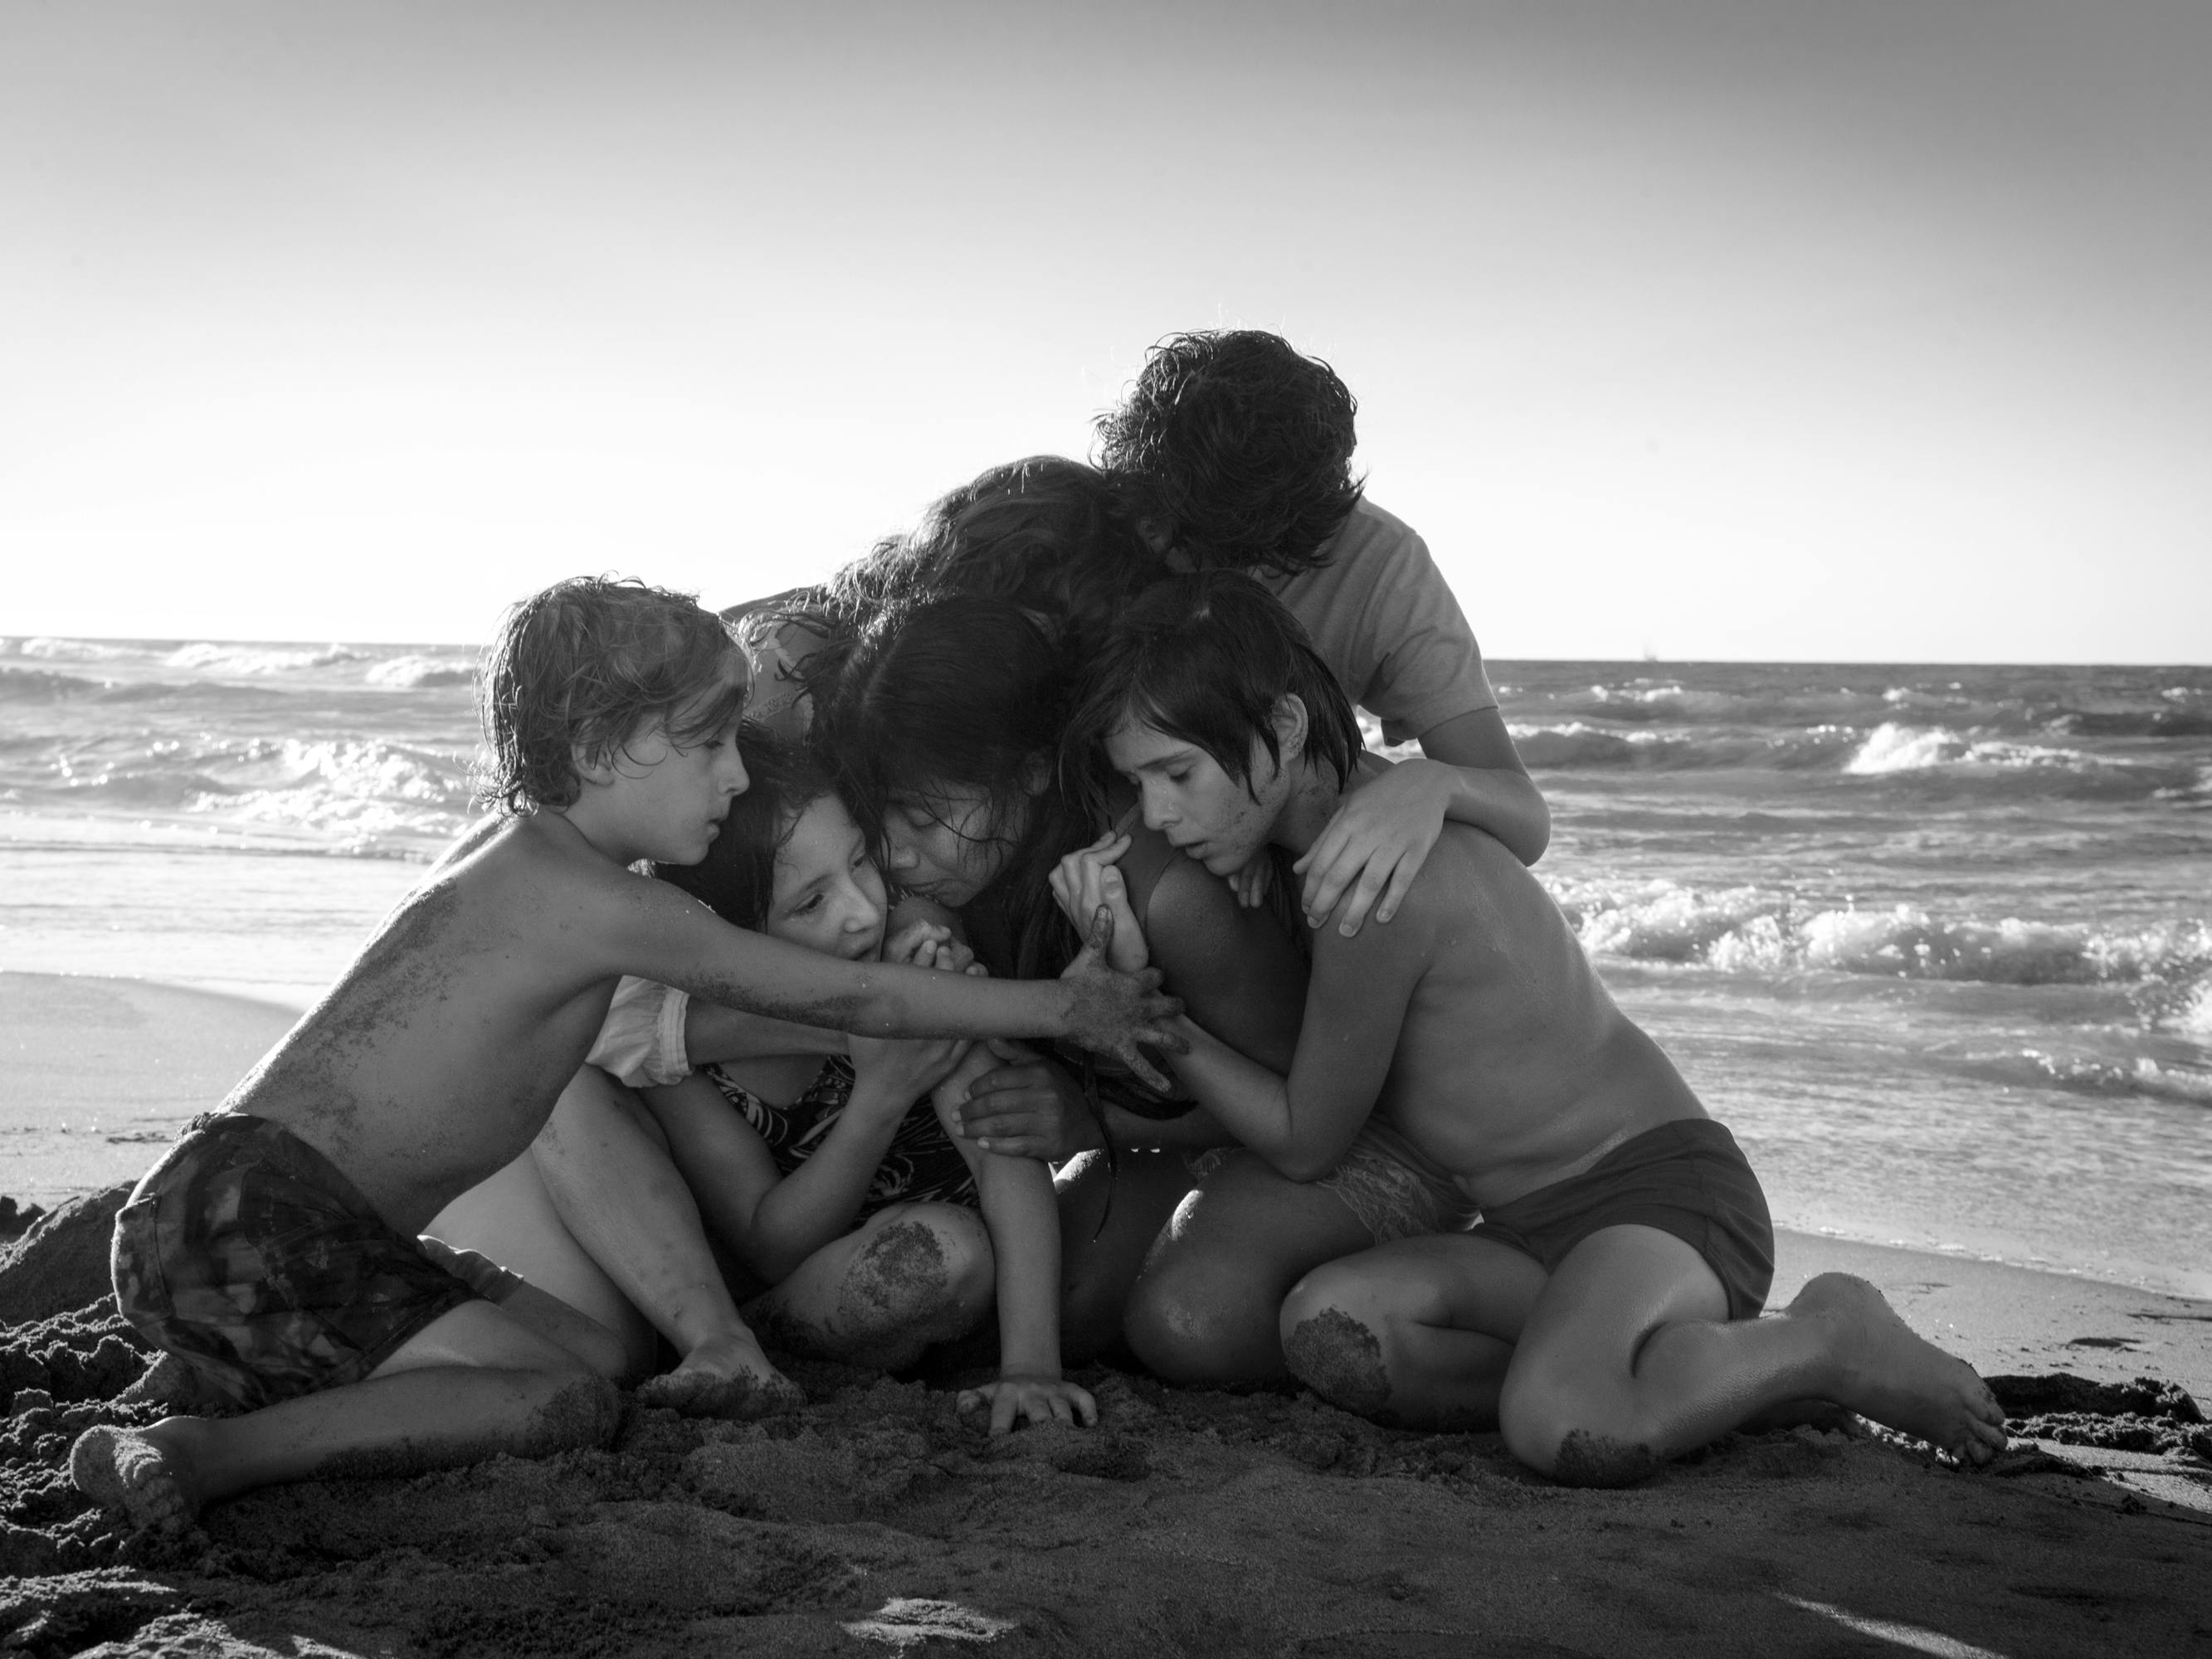 Six children hug in a cluster on a sandy beach.